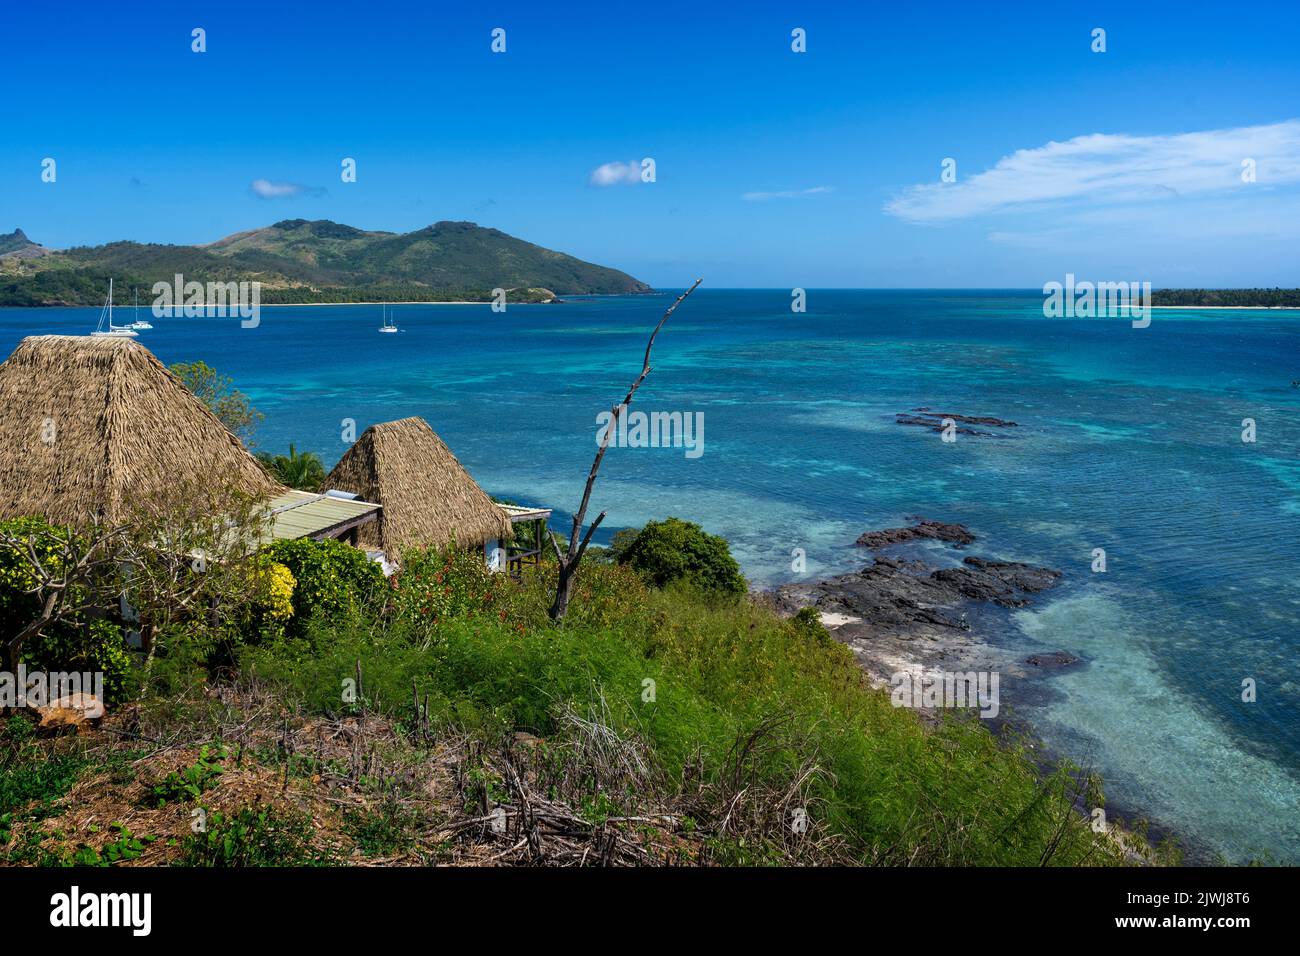 View of lagoon and surrounding islands from Nanuya Island Resort, Yasawa Islands, Fiji Stock Photo